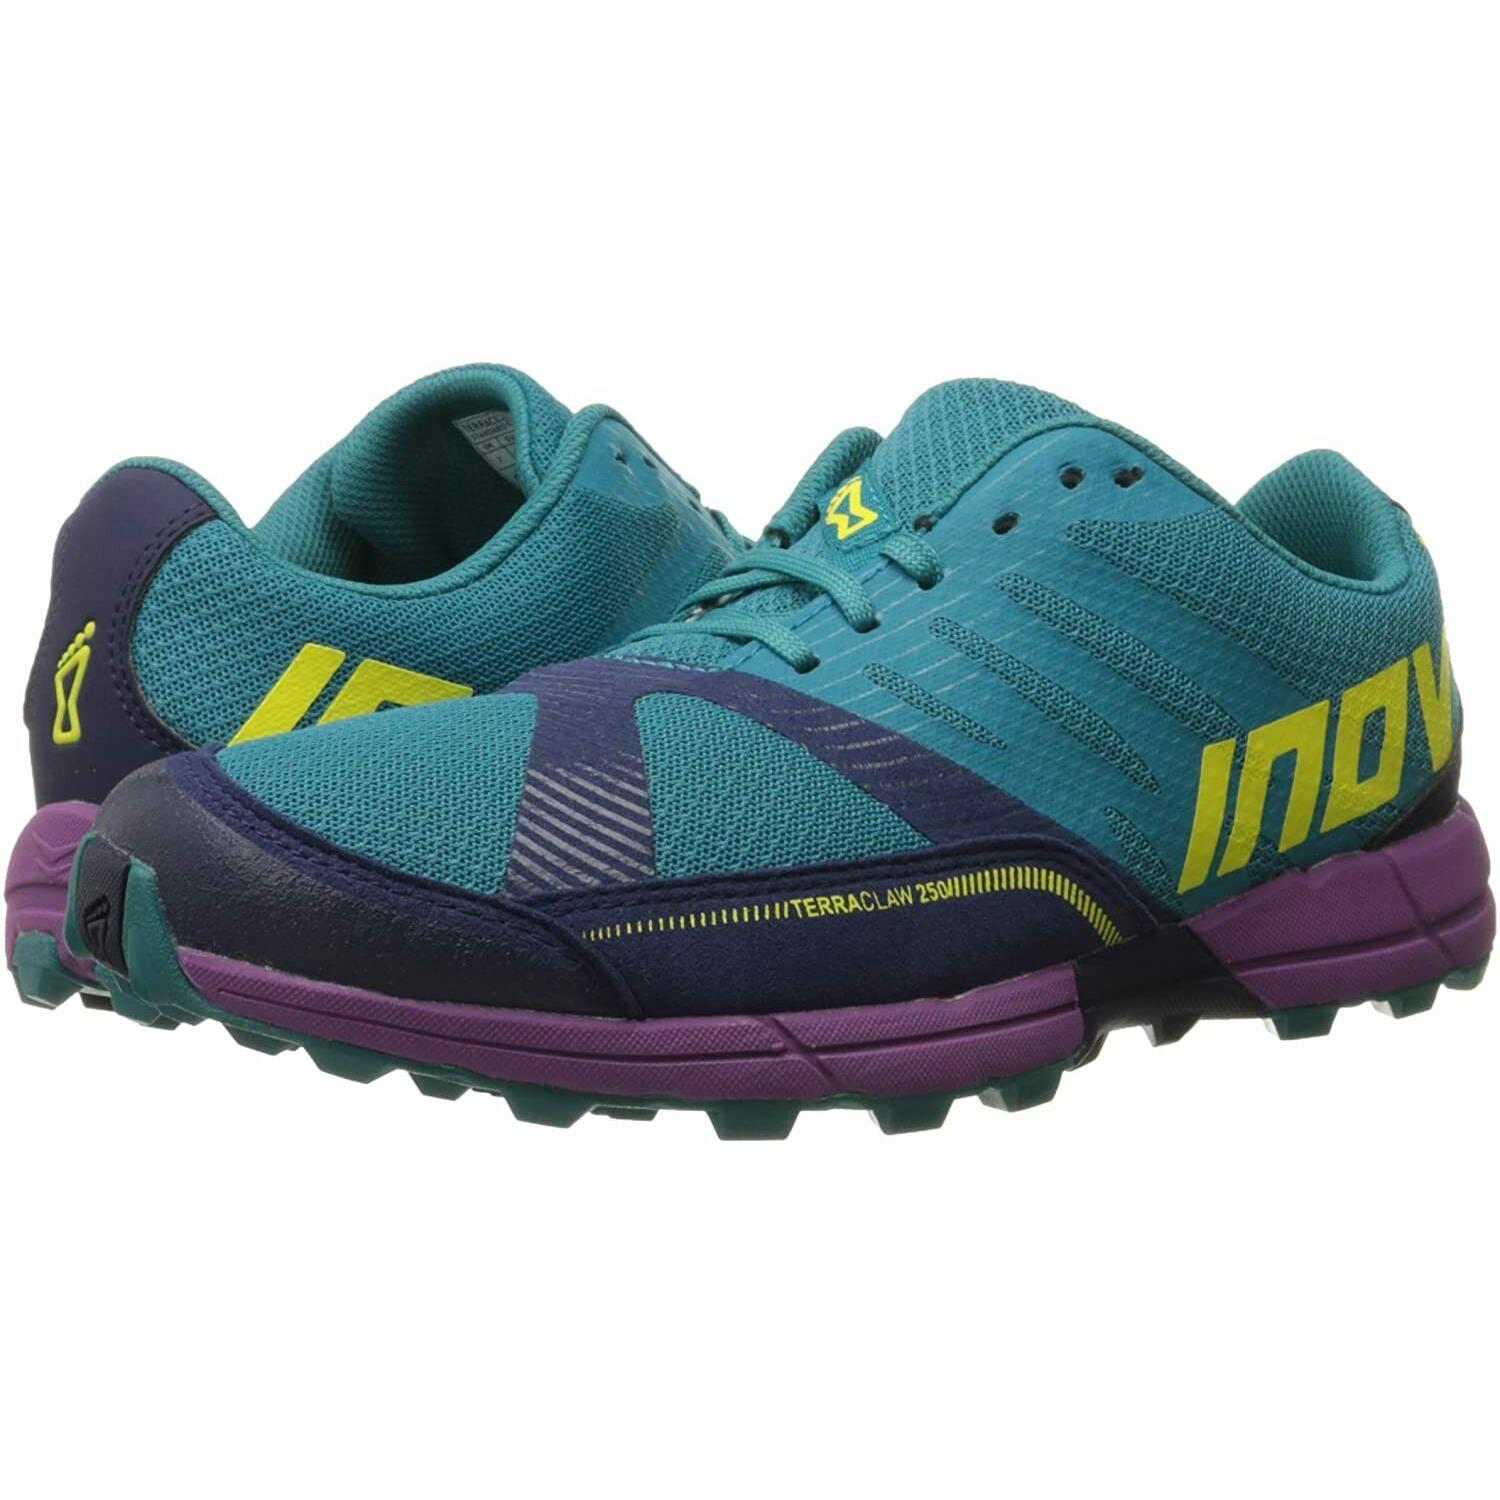 Inov-8 Terraclaw 250 Trail Runner Cross Trainer Shoes Size Women`s W 10 M 8.5